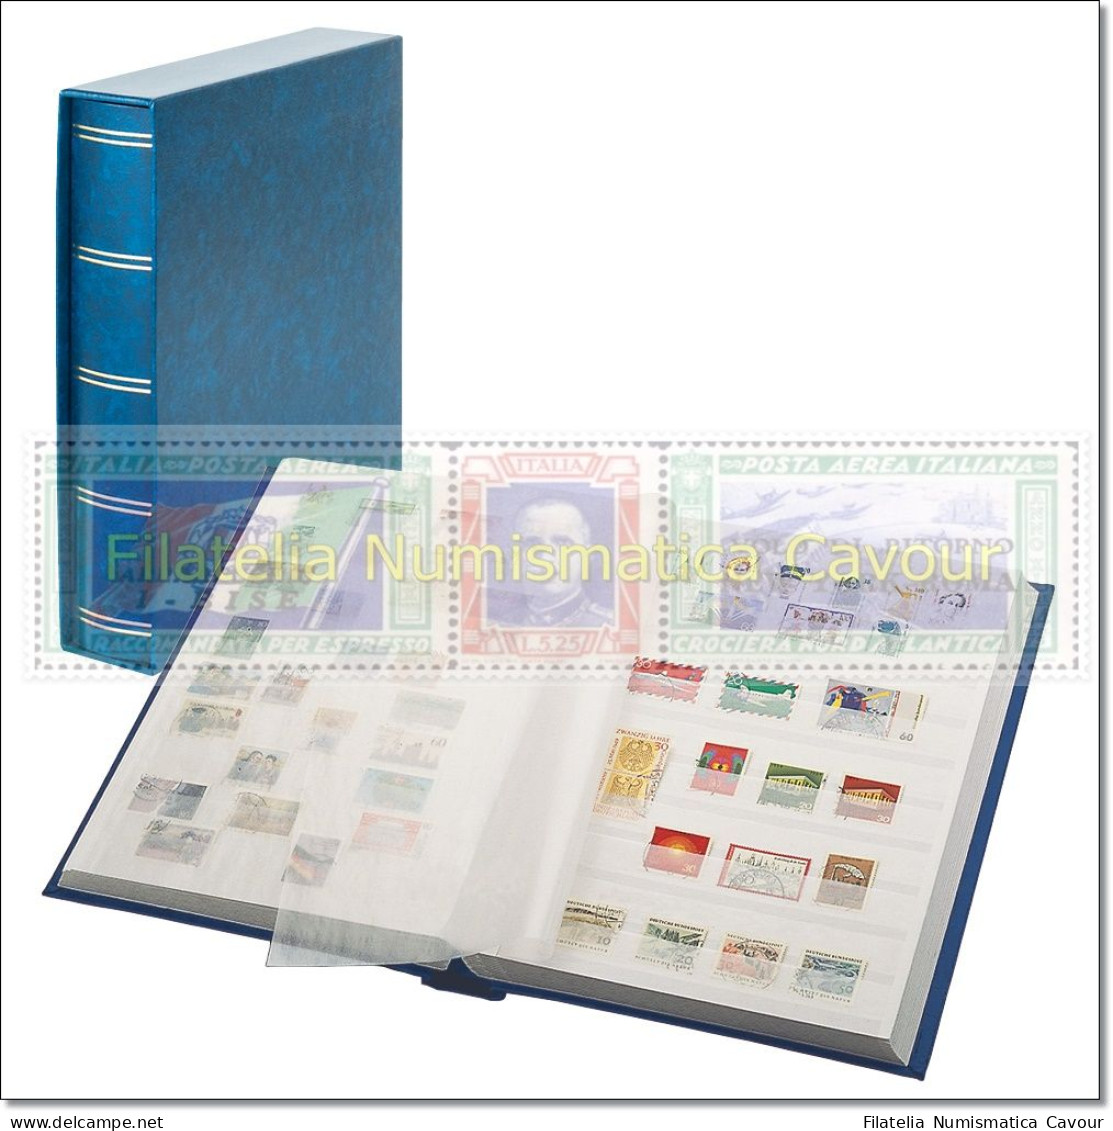 CLASSIFICATORE 30 Pagine FONDO BIANCO COPERTINA IMBOTTITA SIMILPELLE + CUSTODIA - BLU - Large Format, White Pages